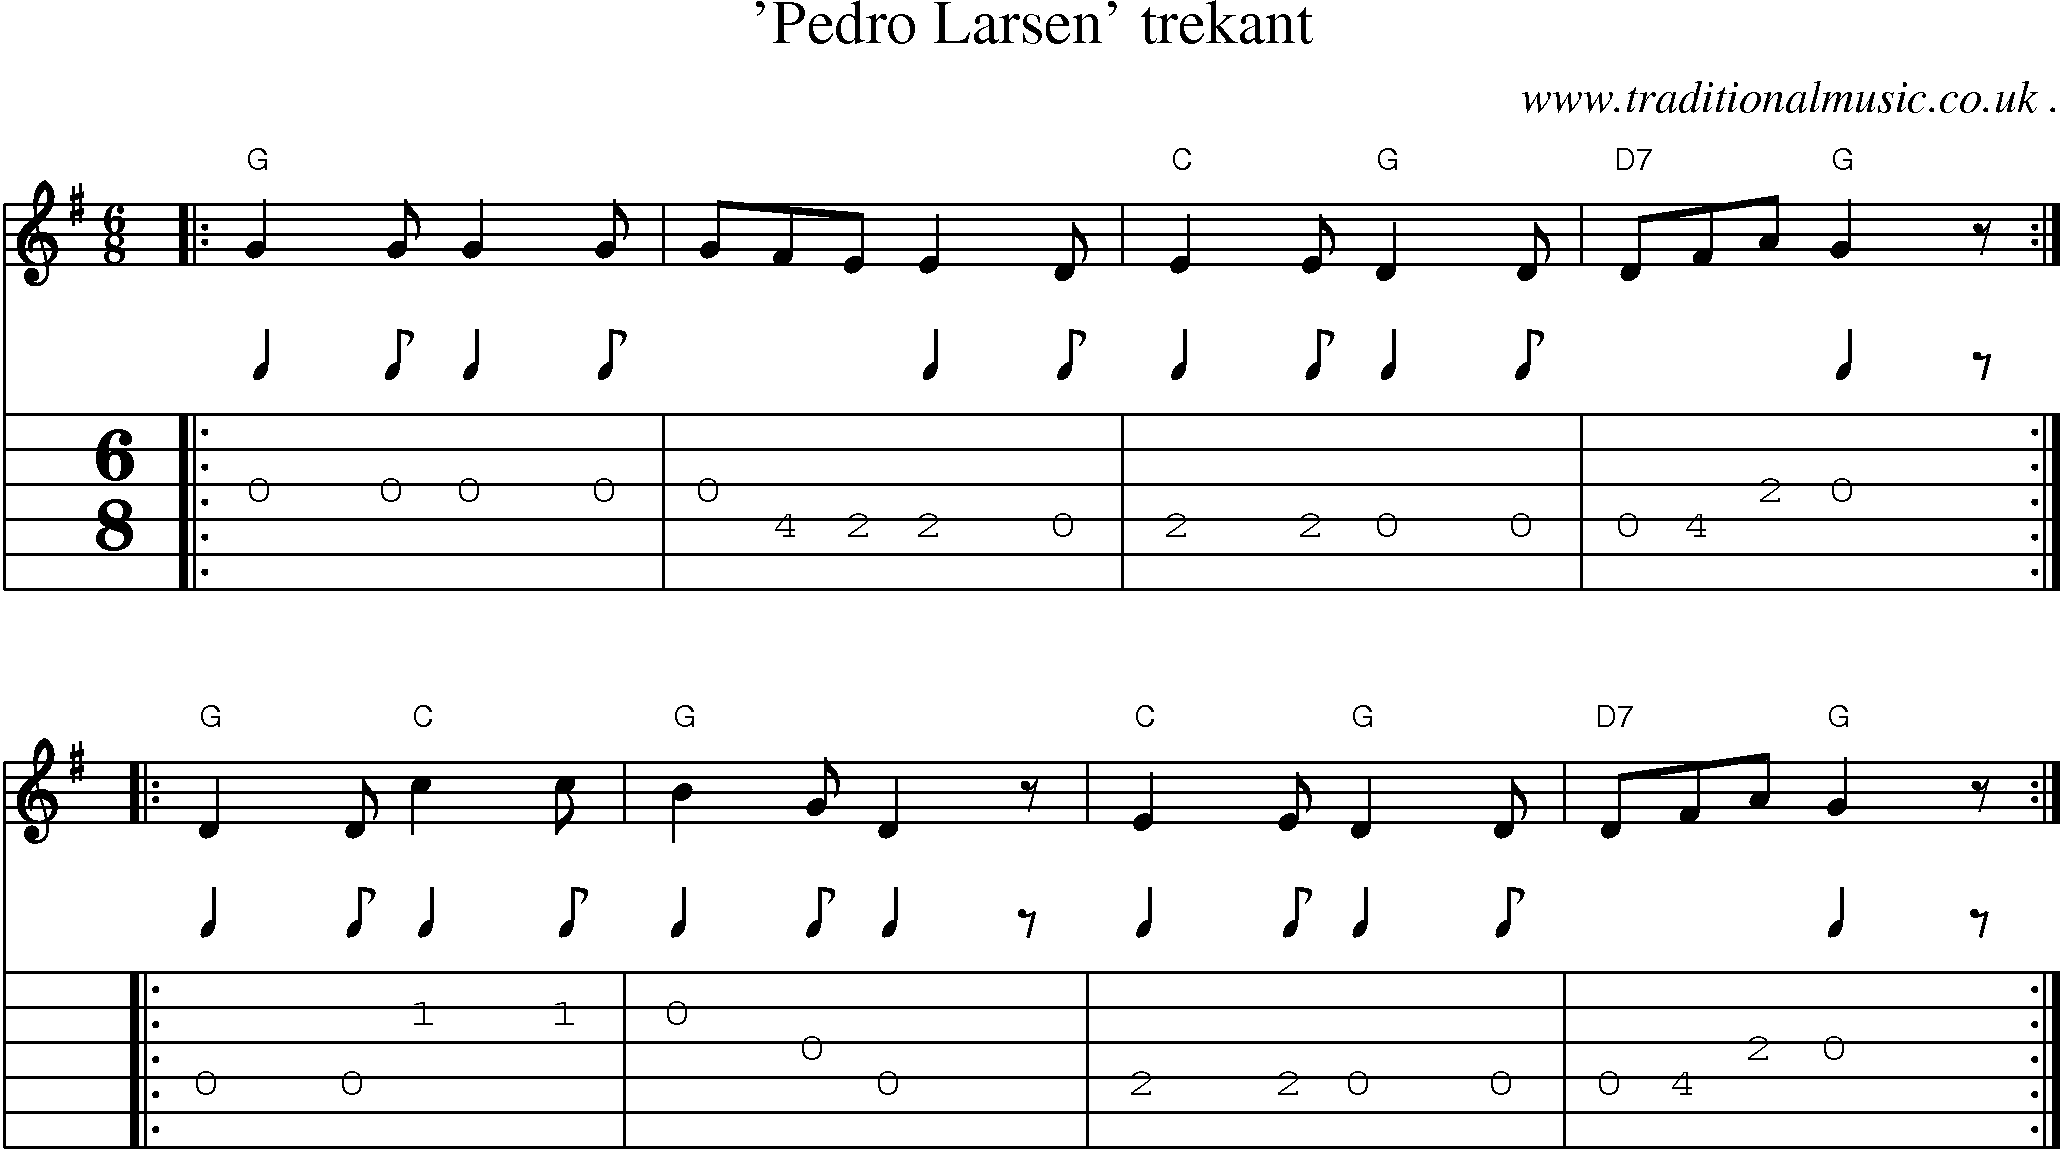 Sheet-music  score, Chords and Guitar Tabs for Pedro Larsen Trekant